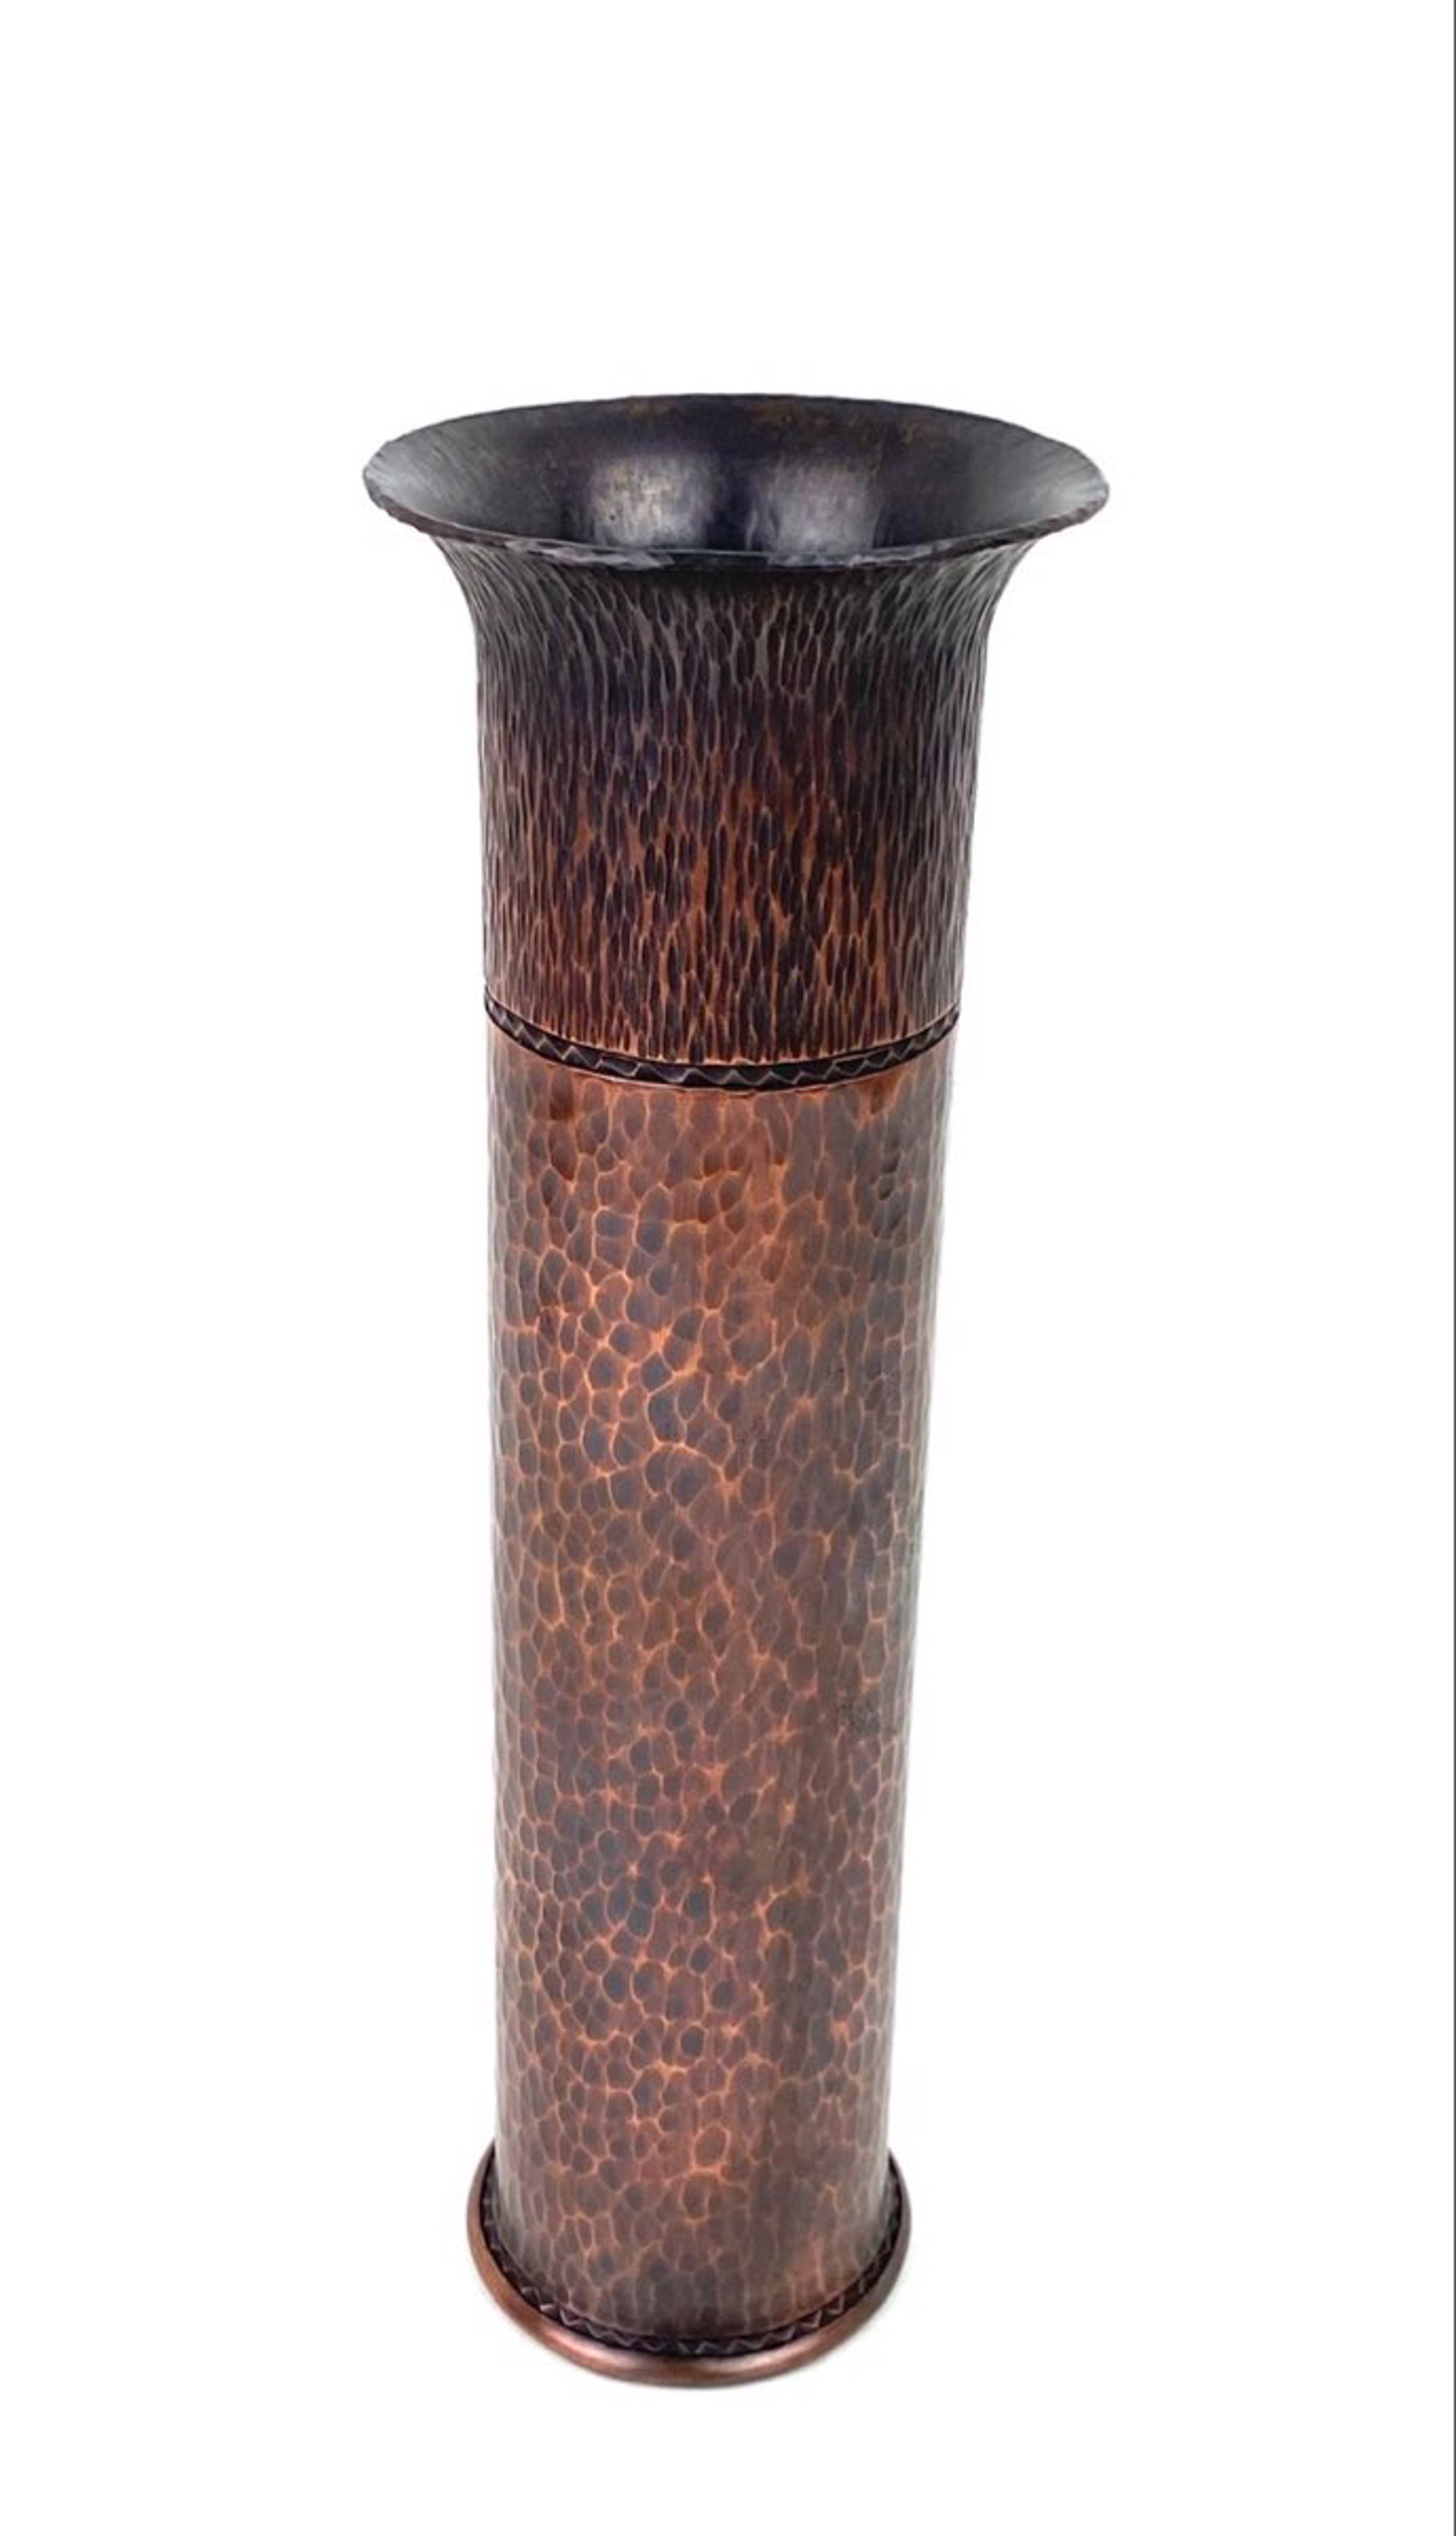 Flute Vase by Robert Taylor